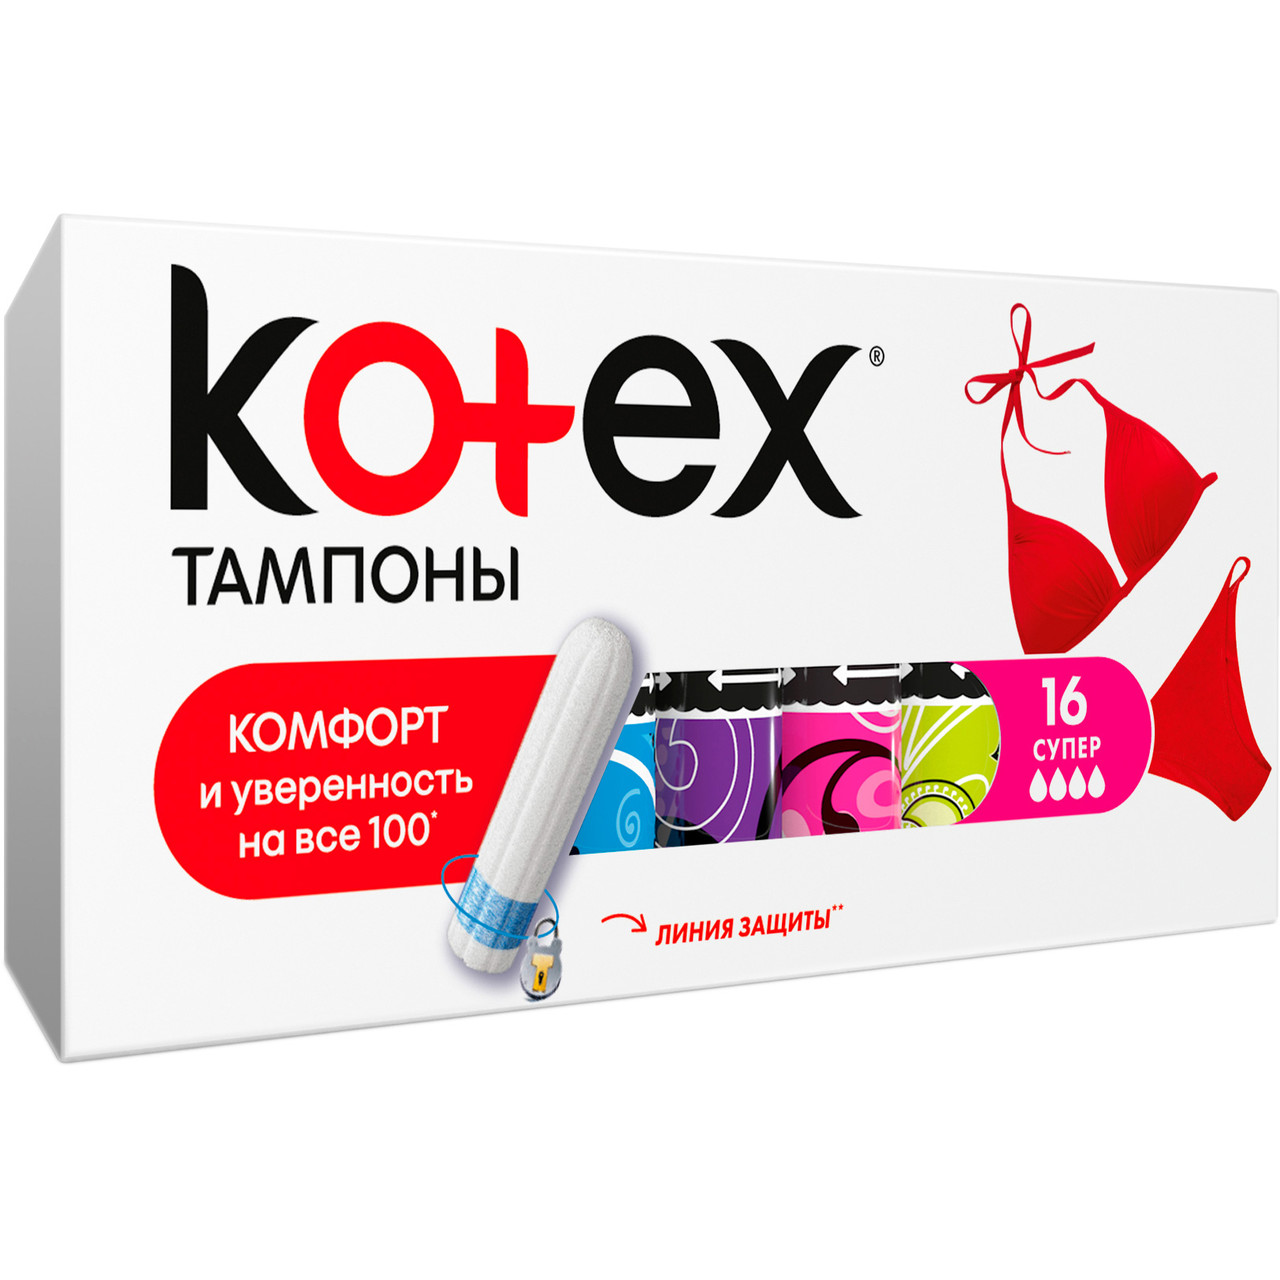 Тампоны "Kotex Super" 4 капли (16шт.)